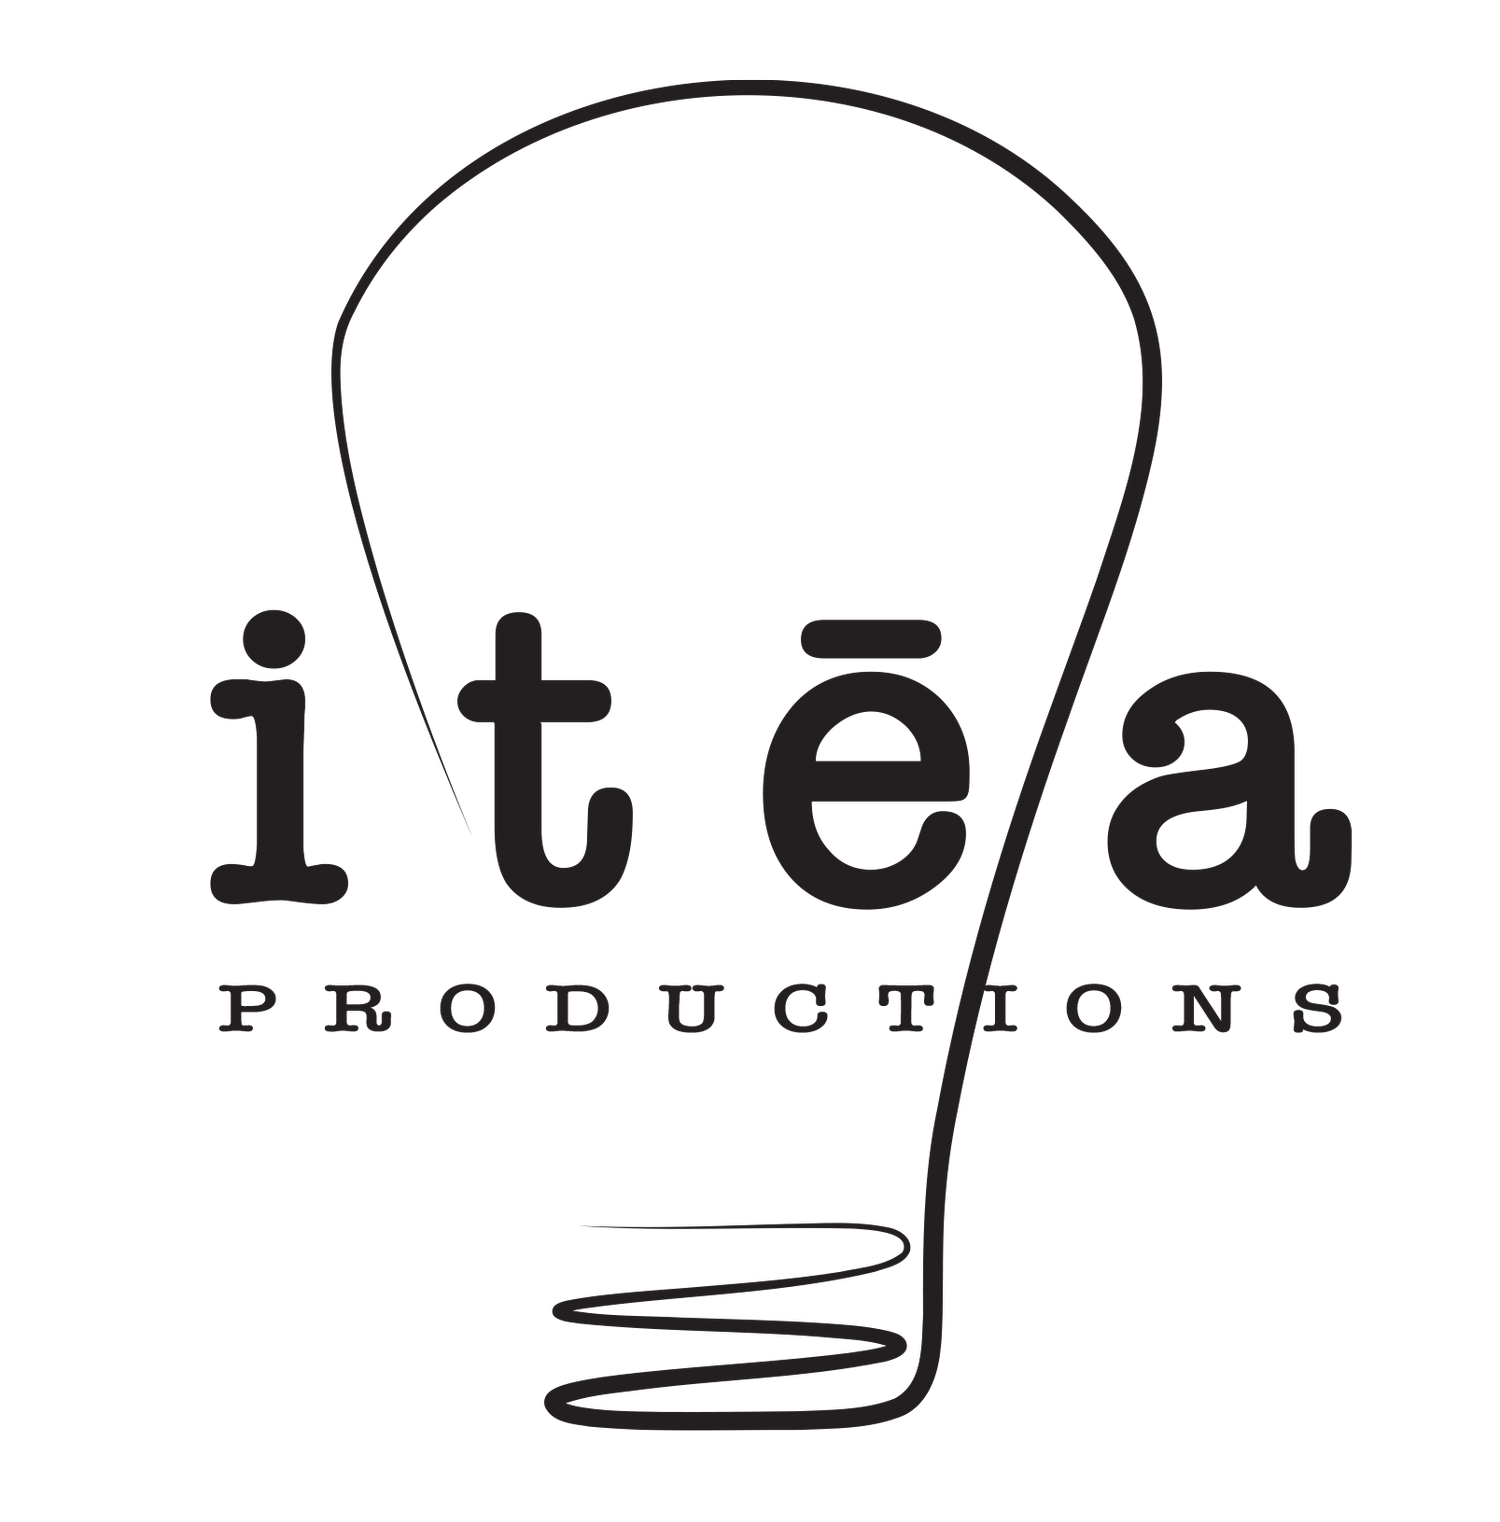 itēa productions LLC